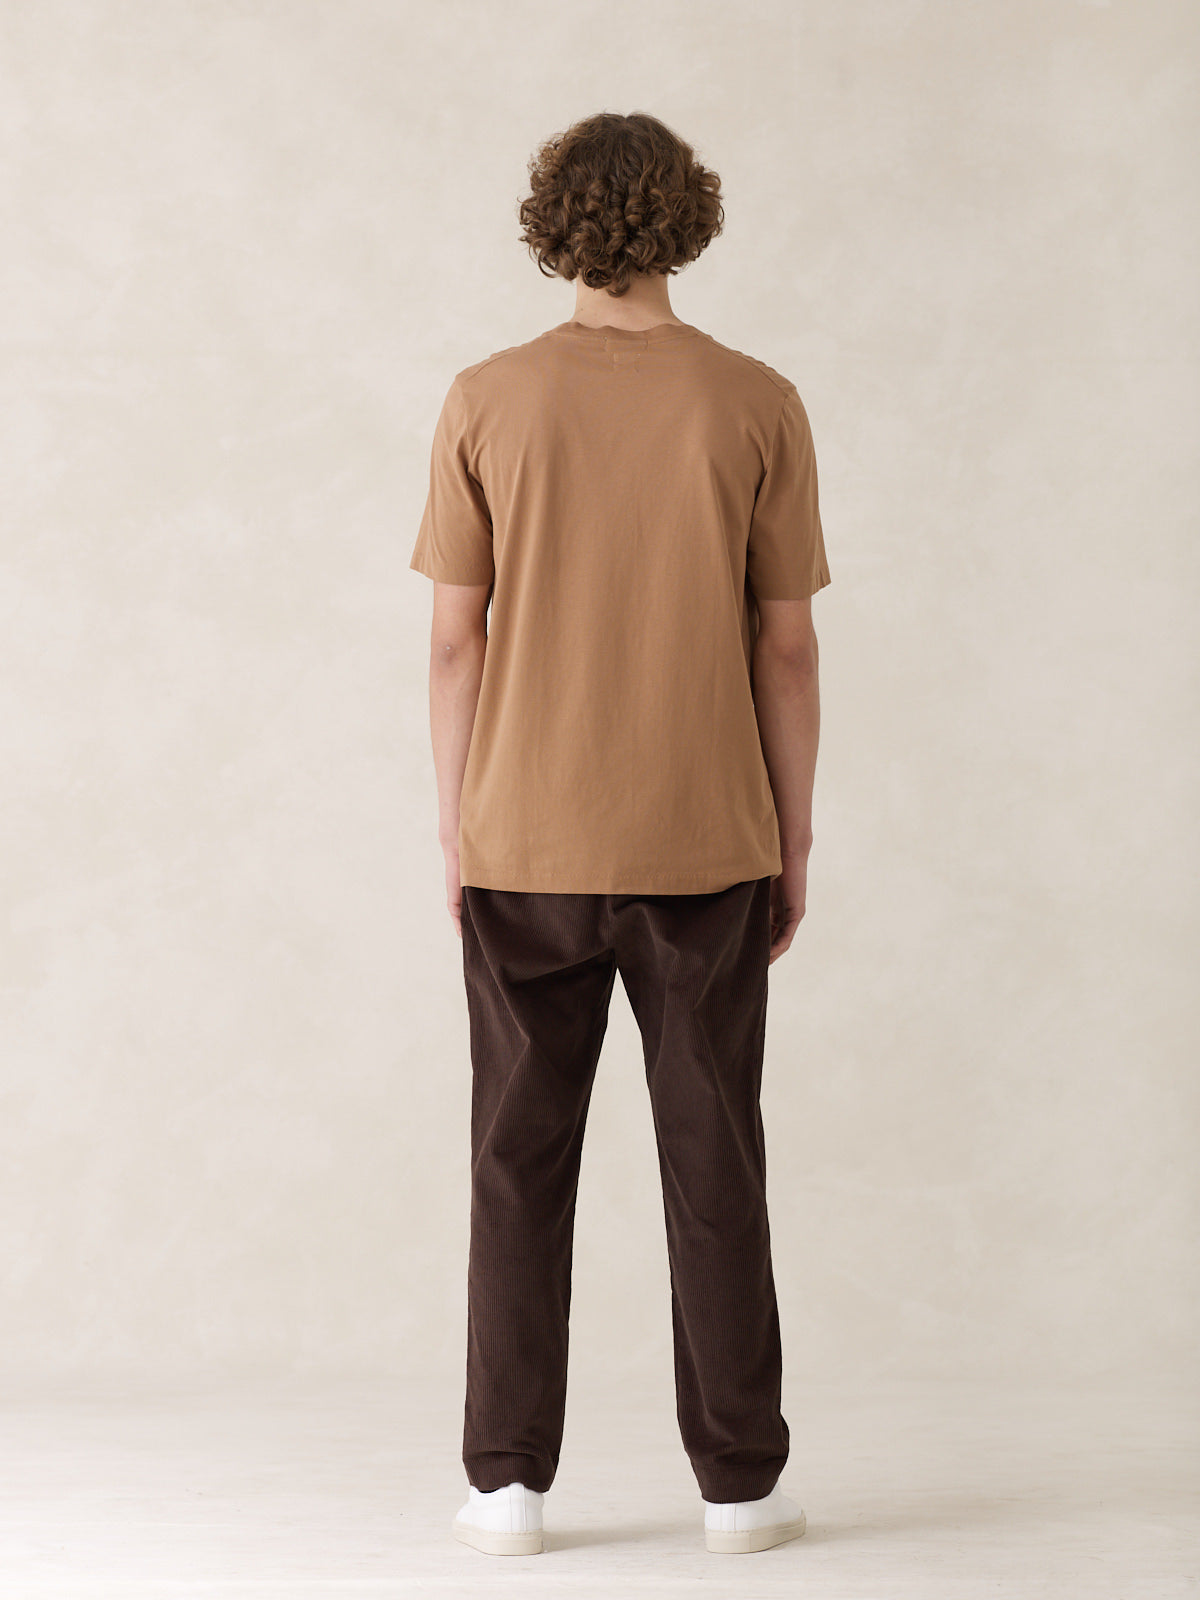 oftt - 01 - perfect fit t-shirt - tan - organic cotton